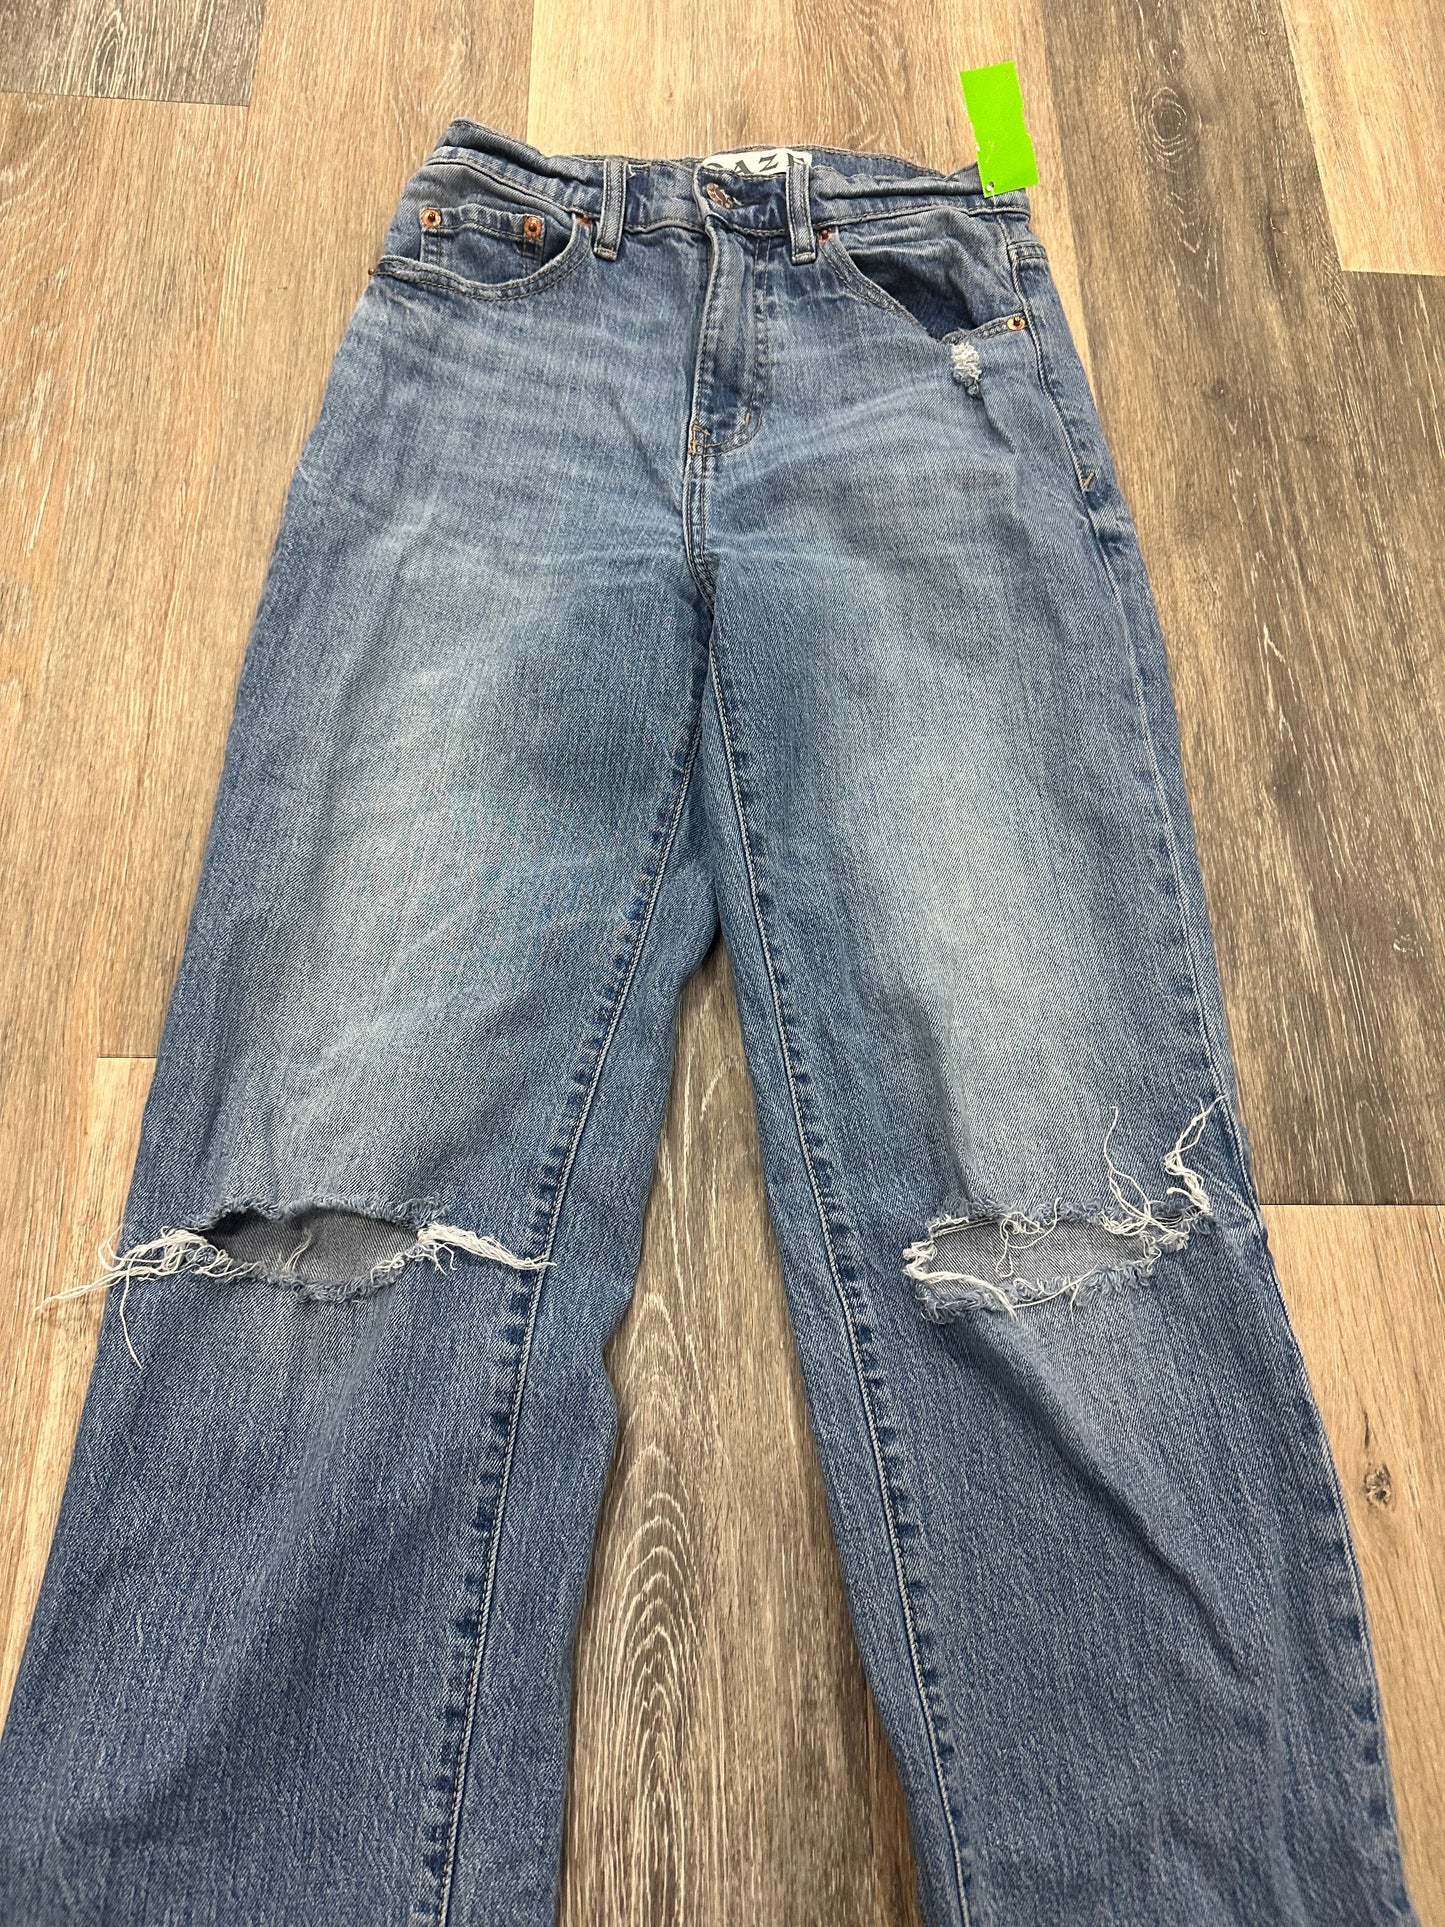 Jeans Straight By Daze  Size: 1